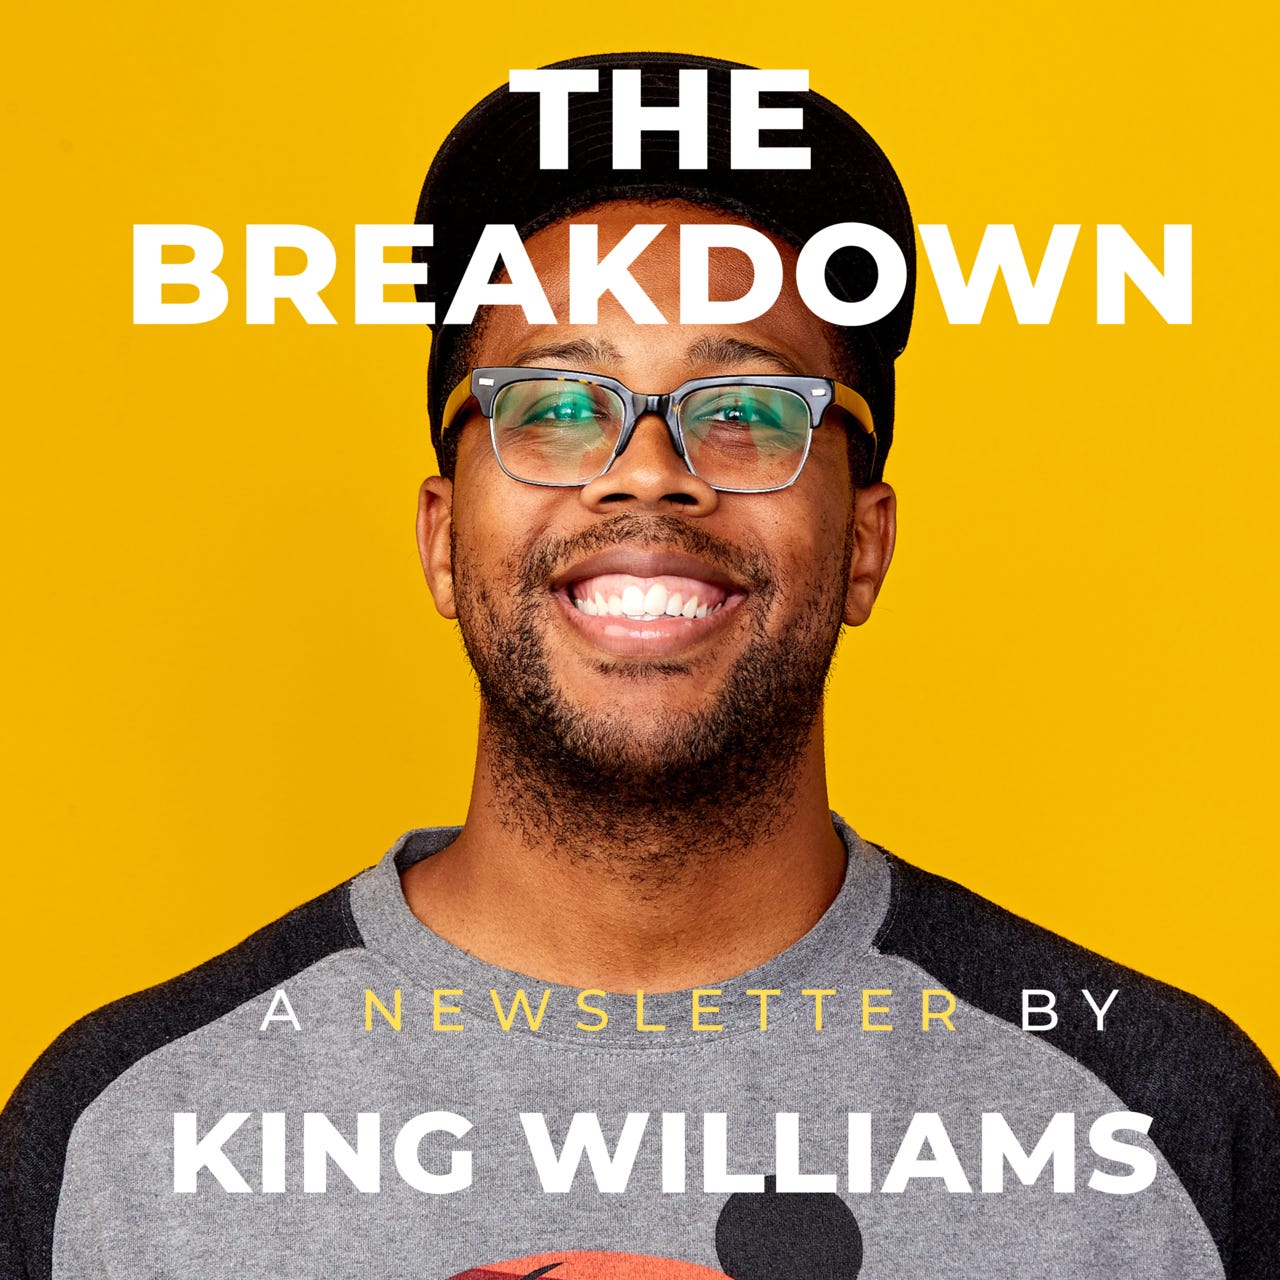 The Breakdown by King Williams